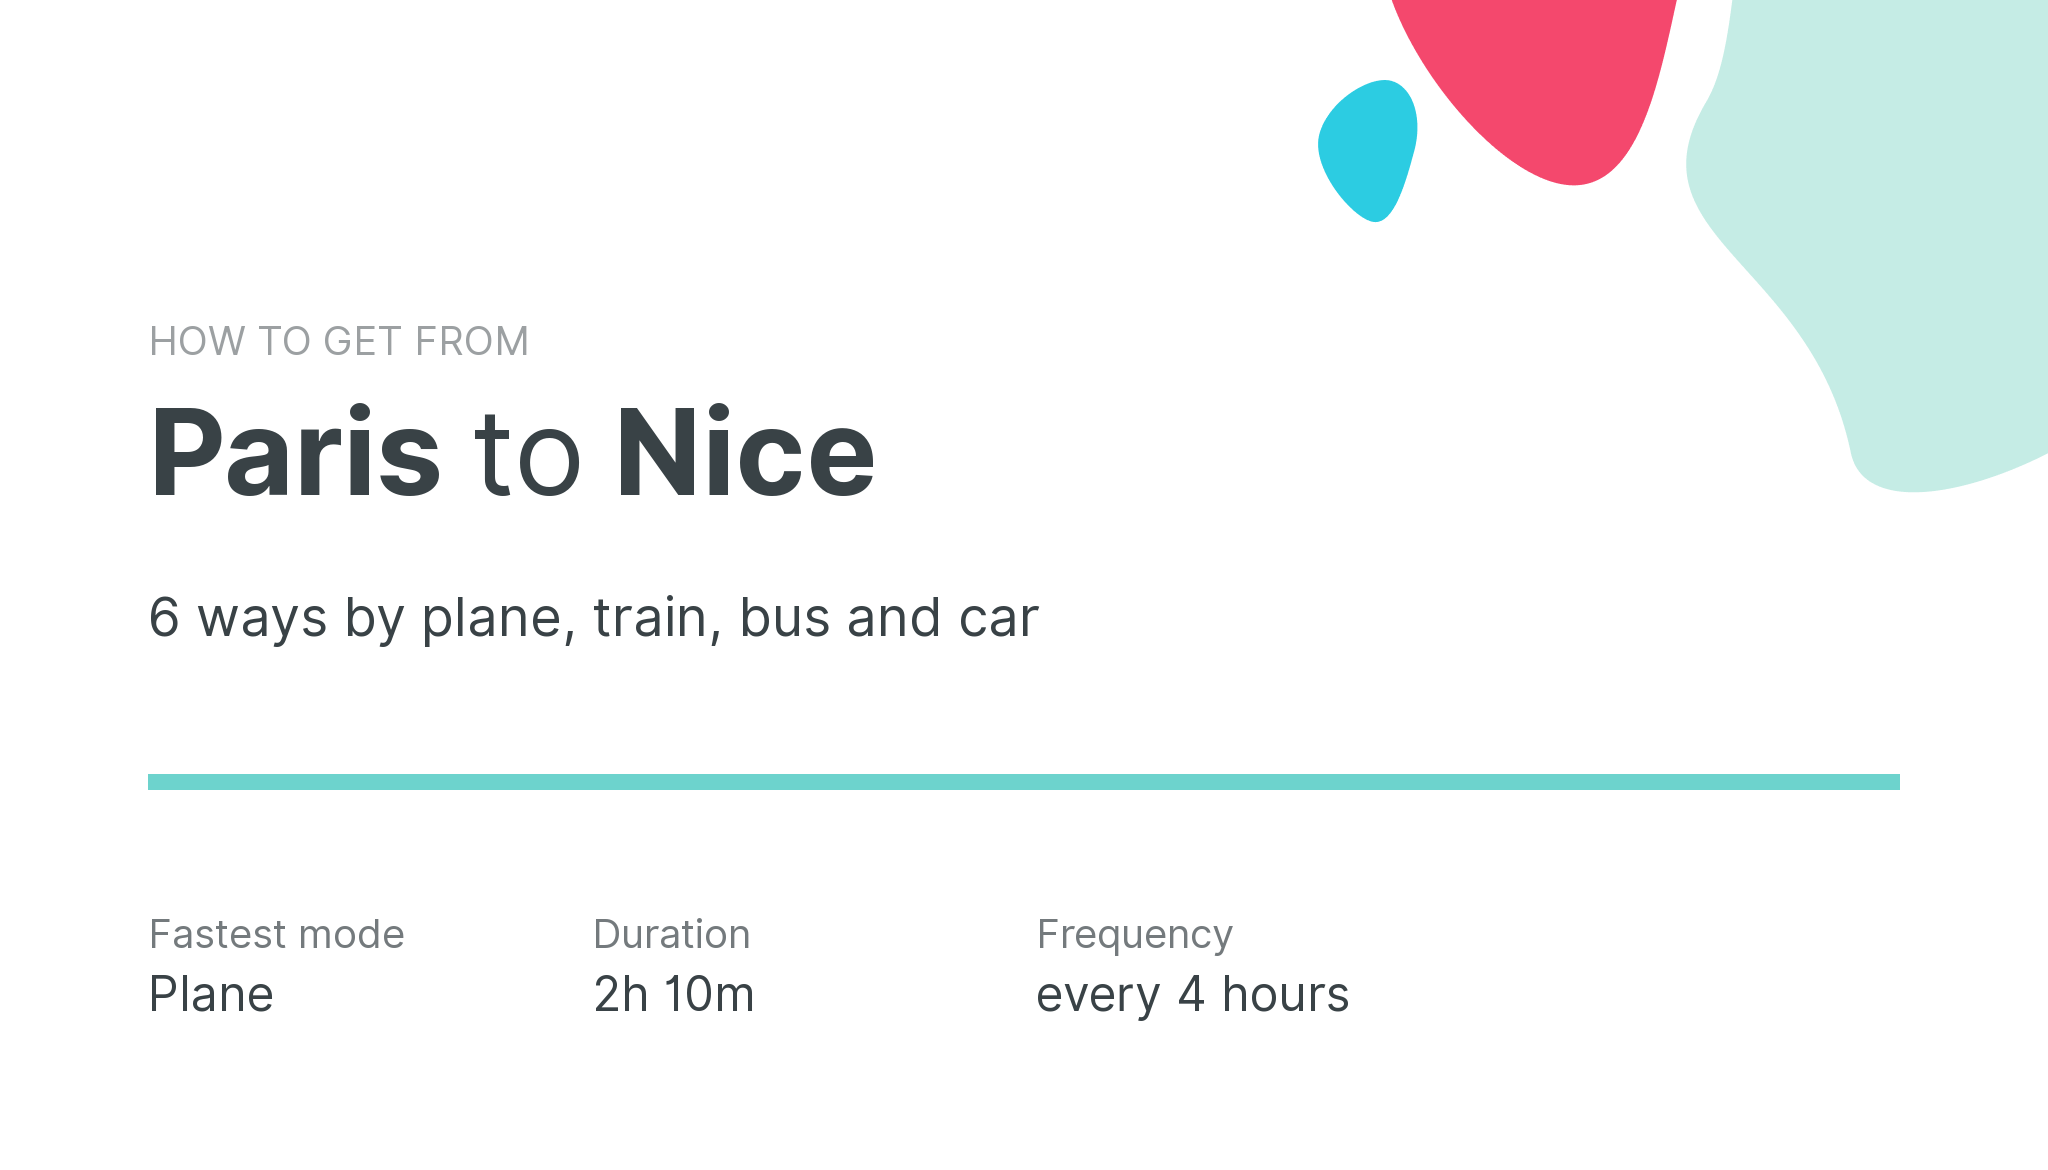 How do I get from Paris to Nice